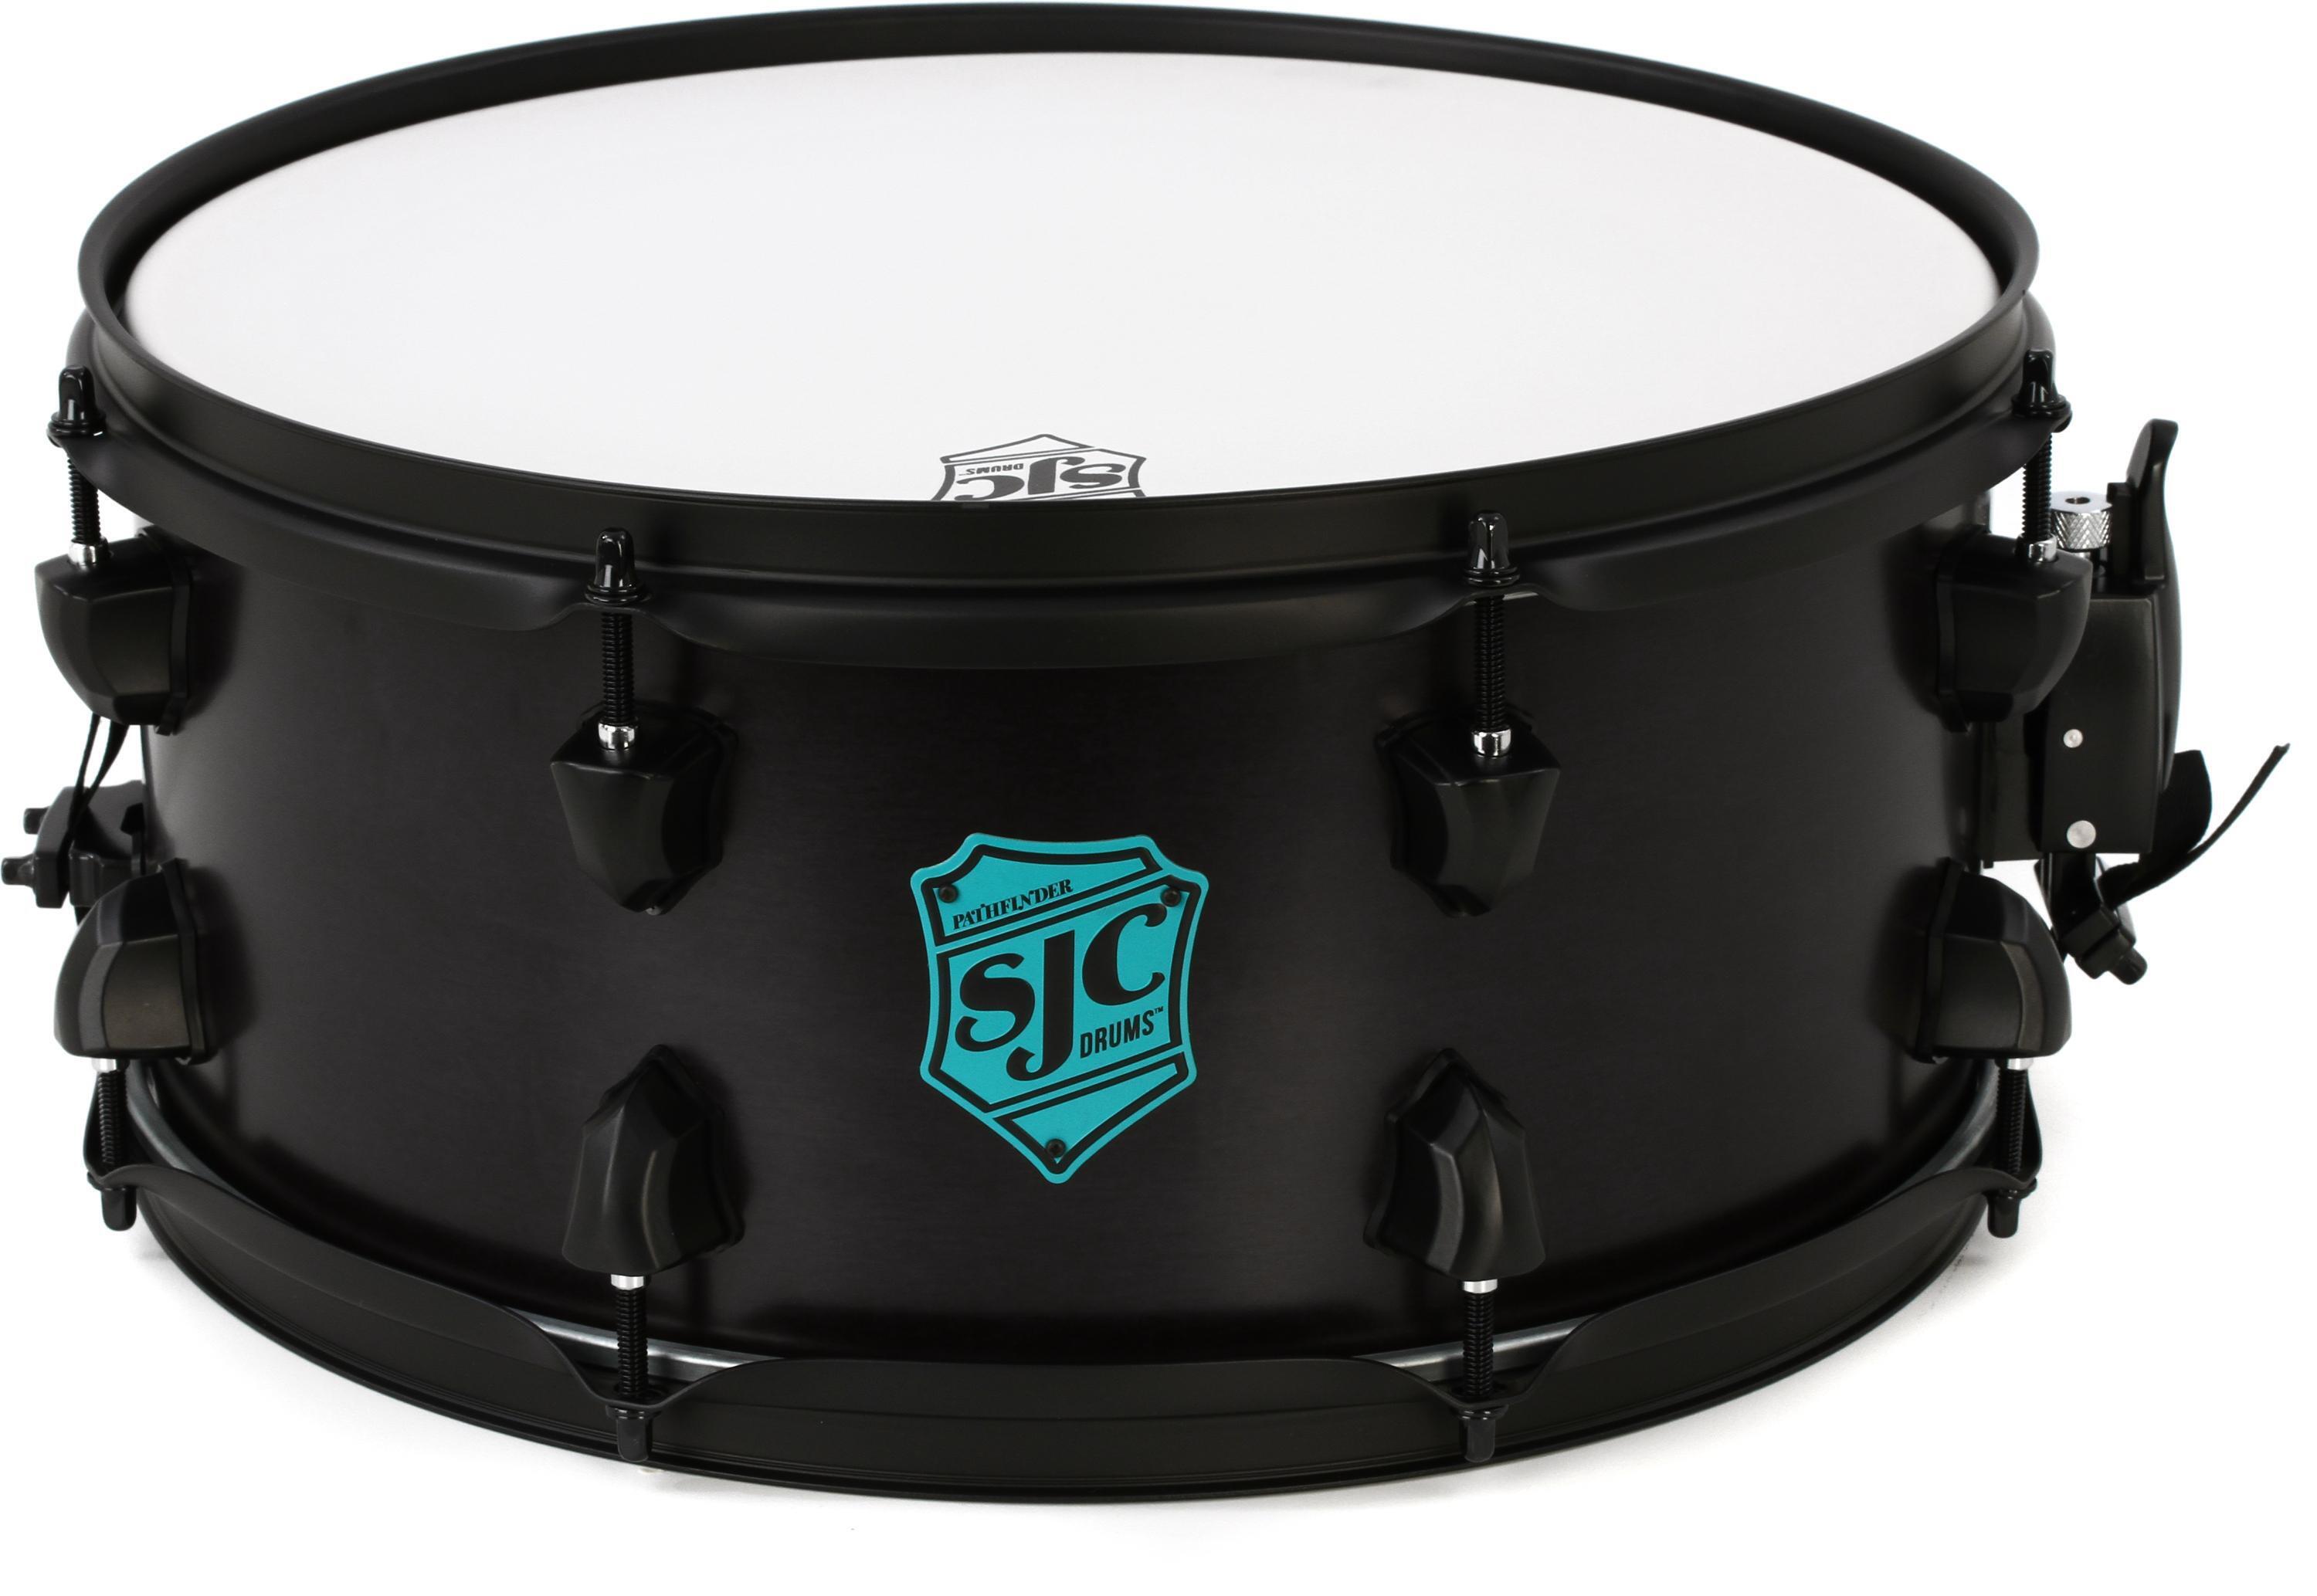 SJC Custom Drums Pathfinder Series Snare Drum - 6.5 x 14 inch - Black Satin